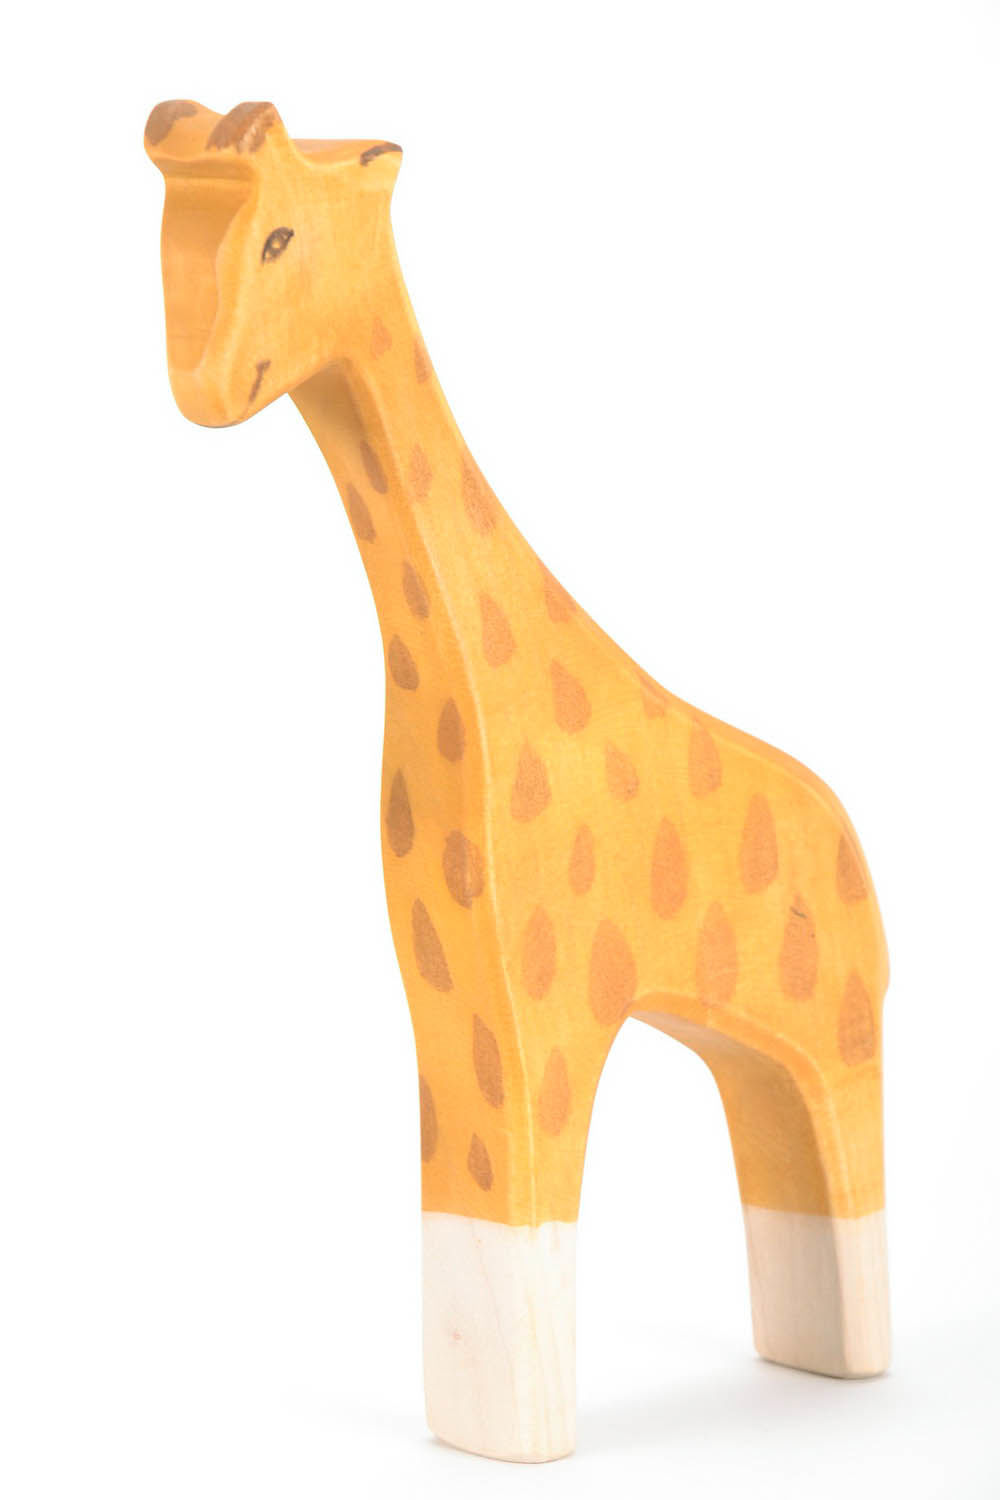 Brinquedo de madeira Girafa foto 3